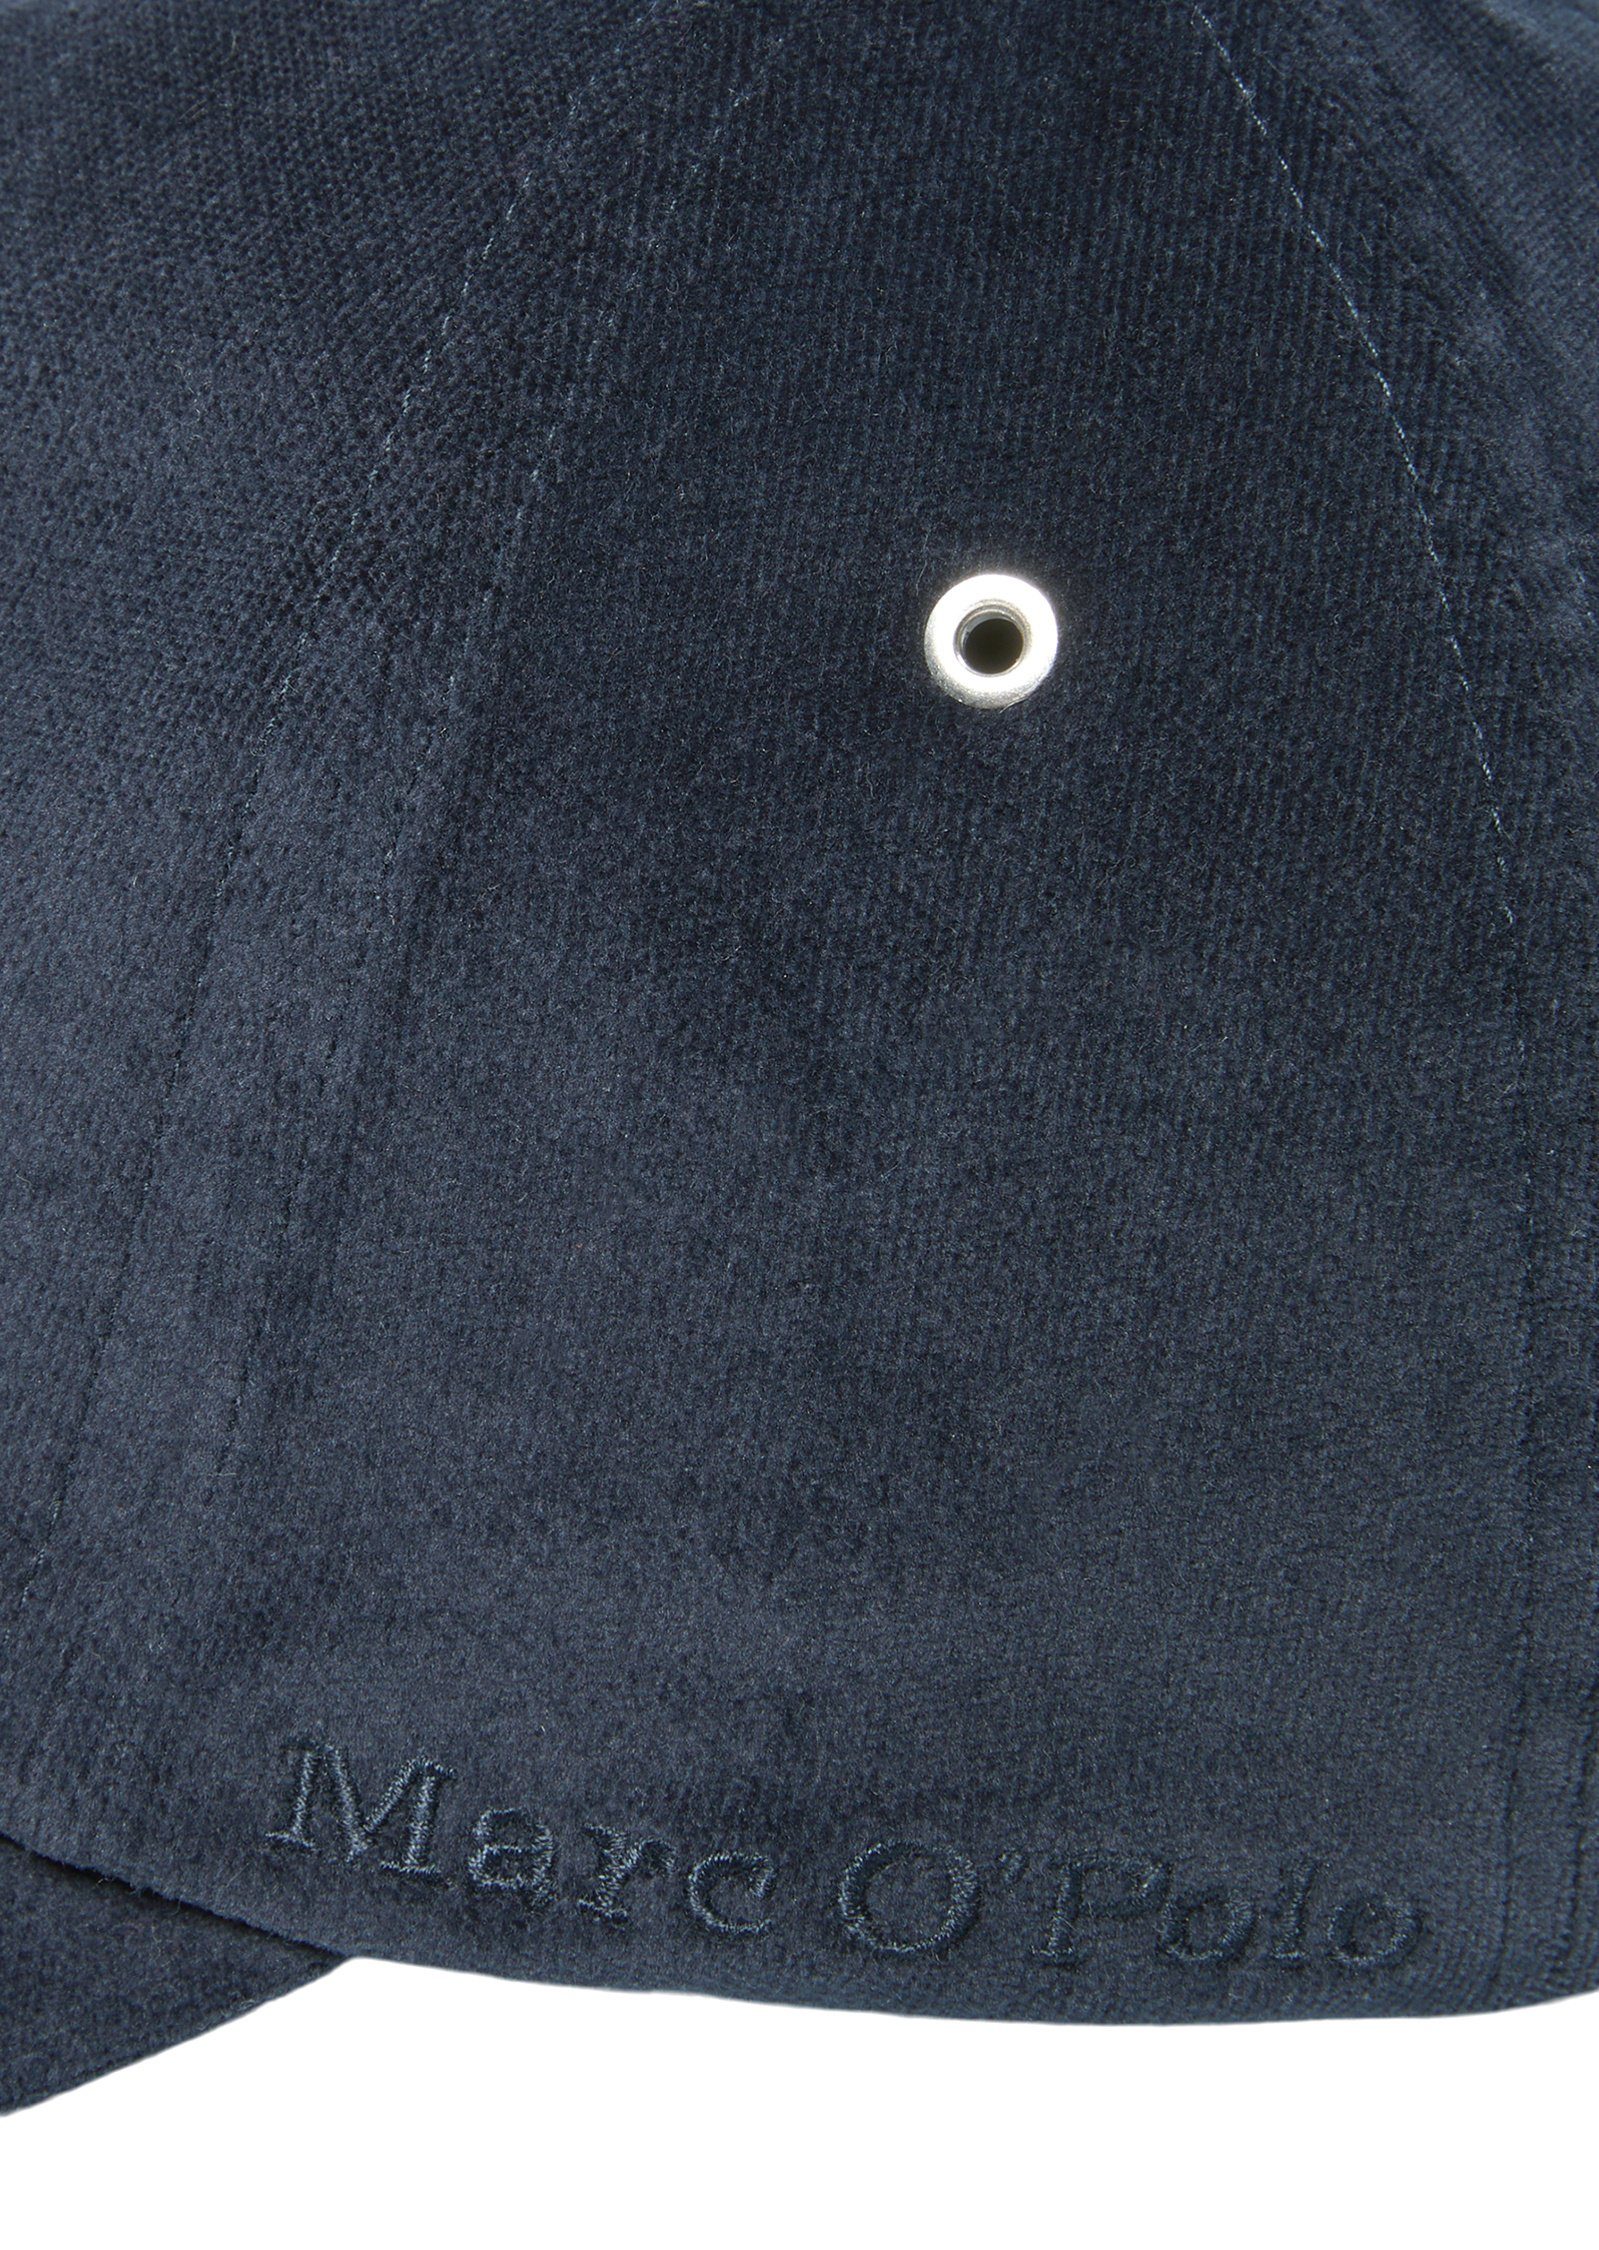 O'Polo Marc aus Organic-Cotton-Lyocell-Mix blau Baseball Cap